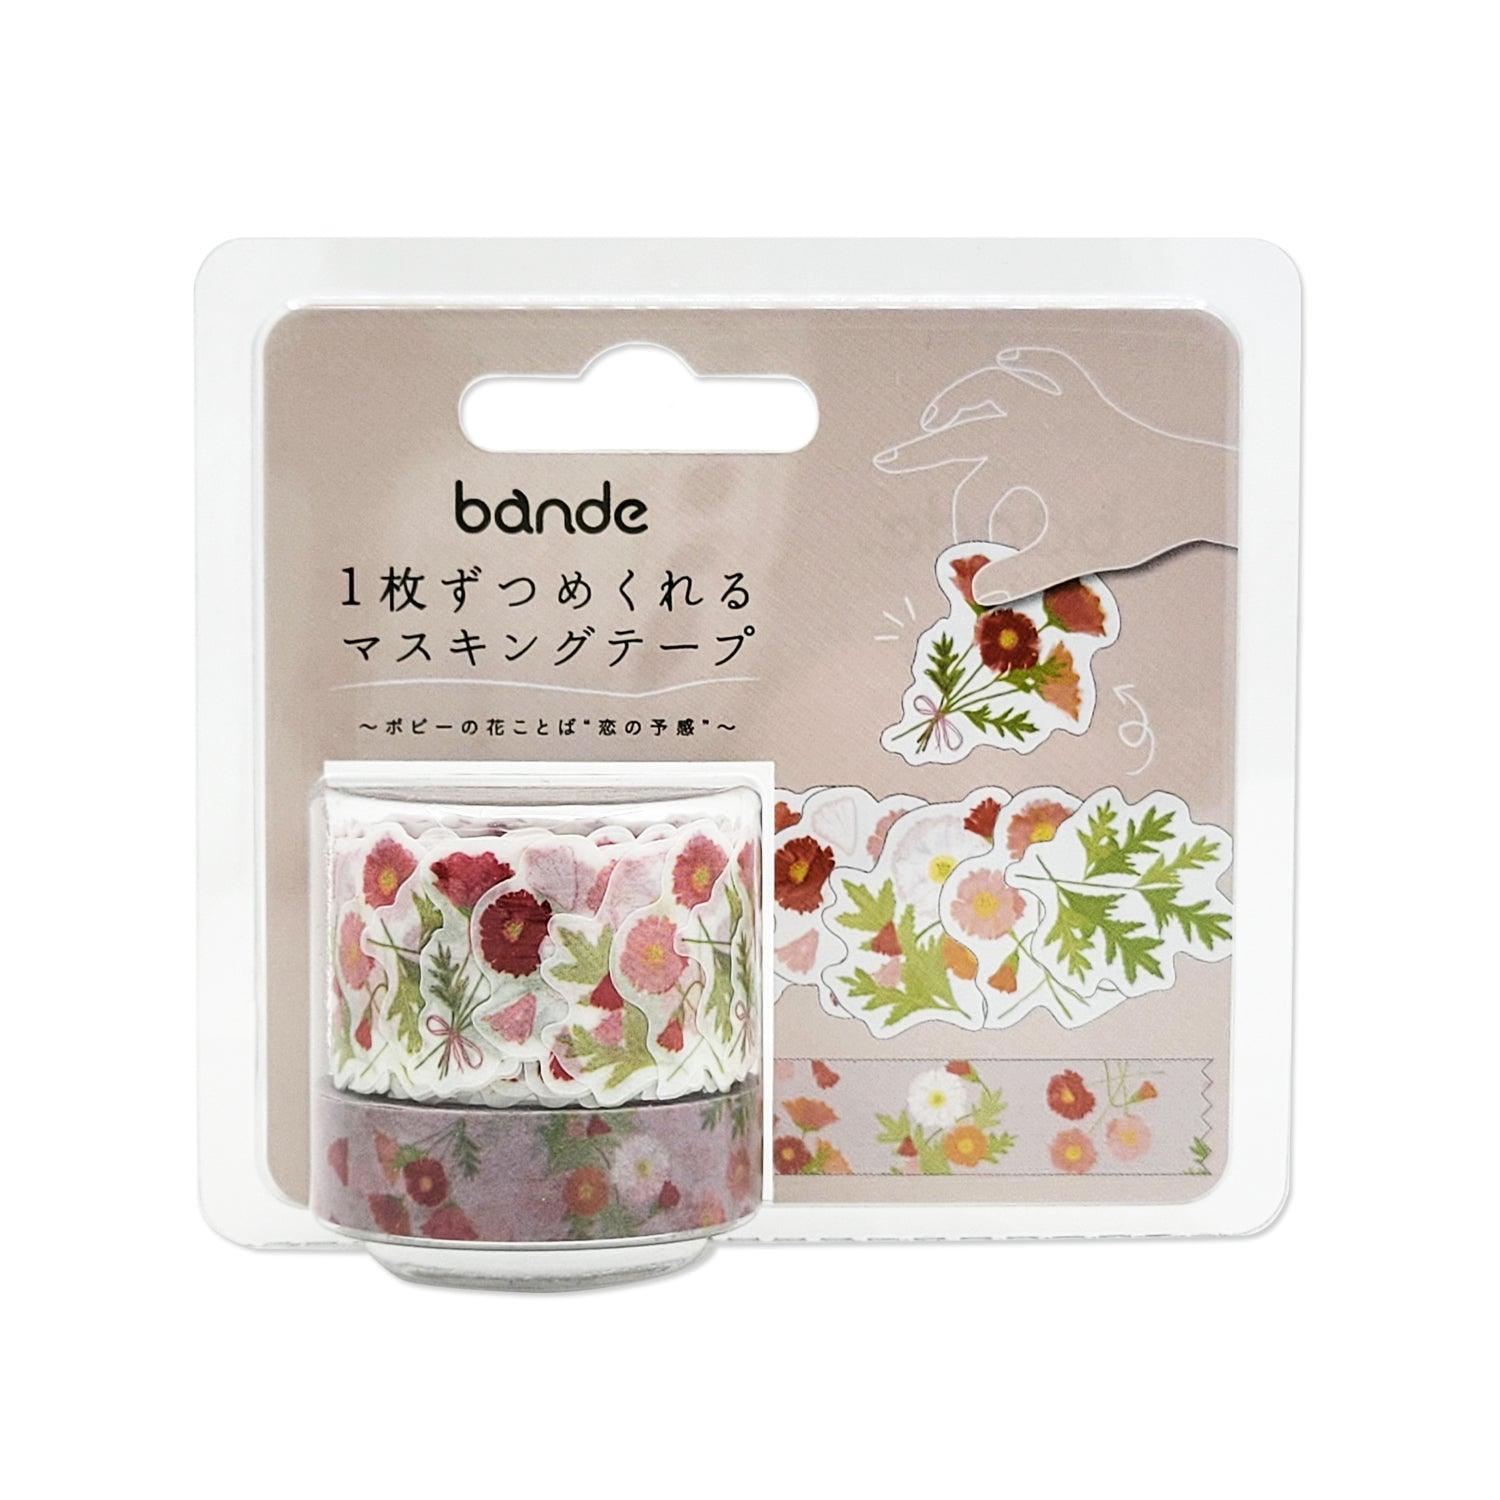 Bande Washi sticker roll Washi Tape Set - Flower Language Poppy | papermindstationery.com | Bande, Flower, Masking Roll Stickers